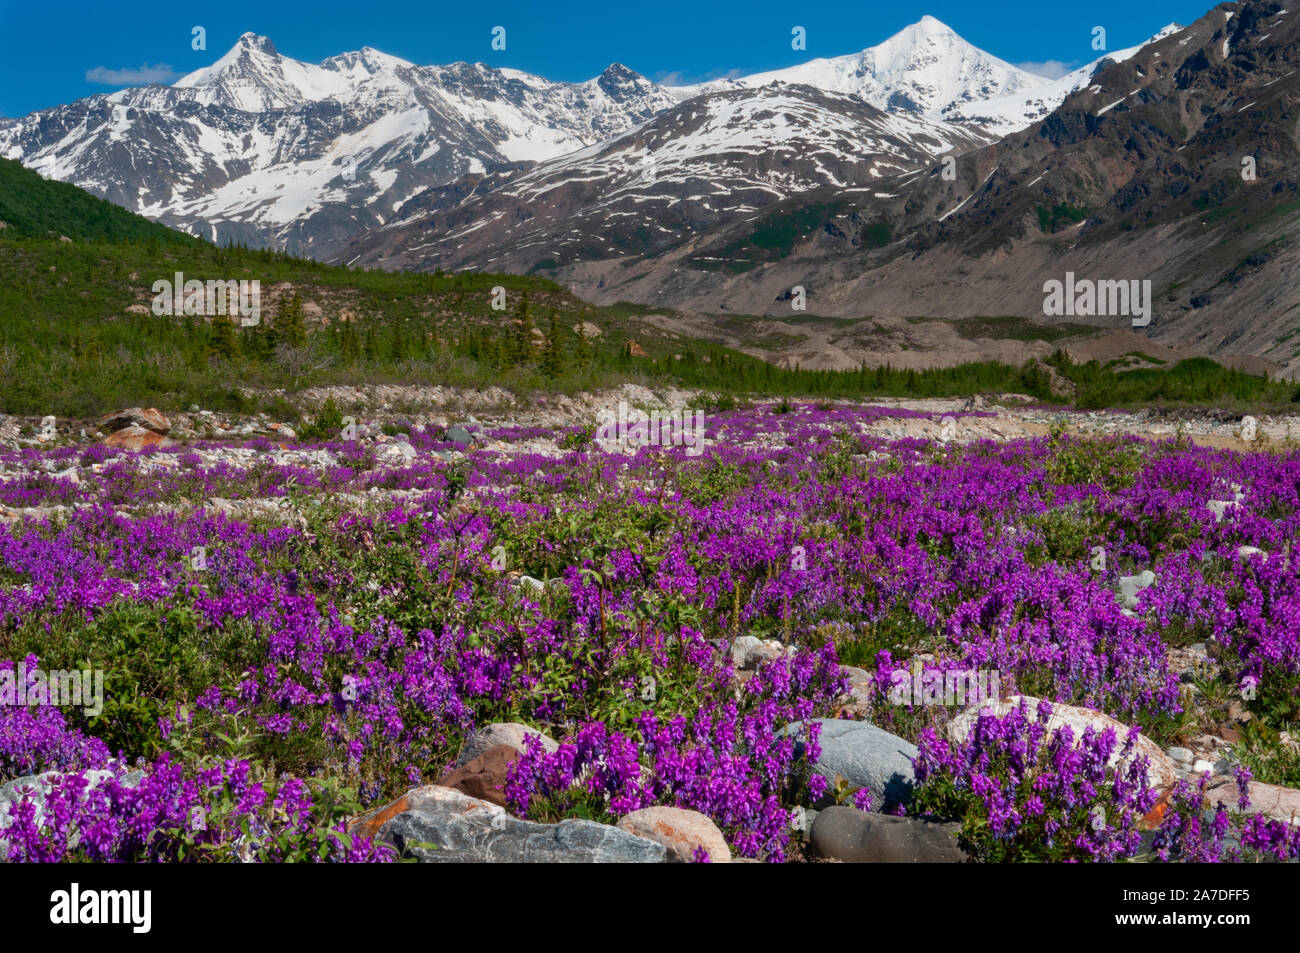 North America; United States; Alaska; Alaska Range Mountains; Castner Glacier; Moraine; Wild Sweet Pea Flowers; Lathyrus Hedysarum alpinum; Alpine swe Stock Photo